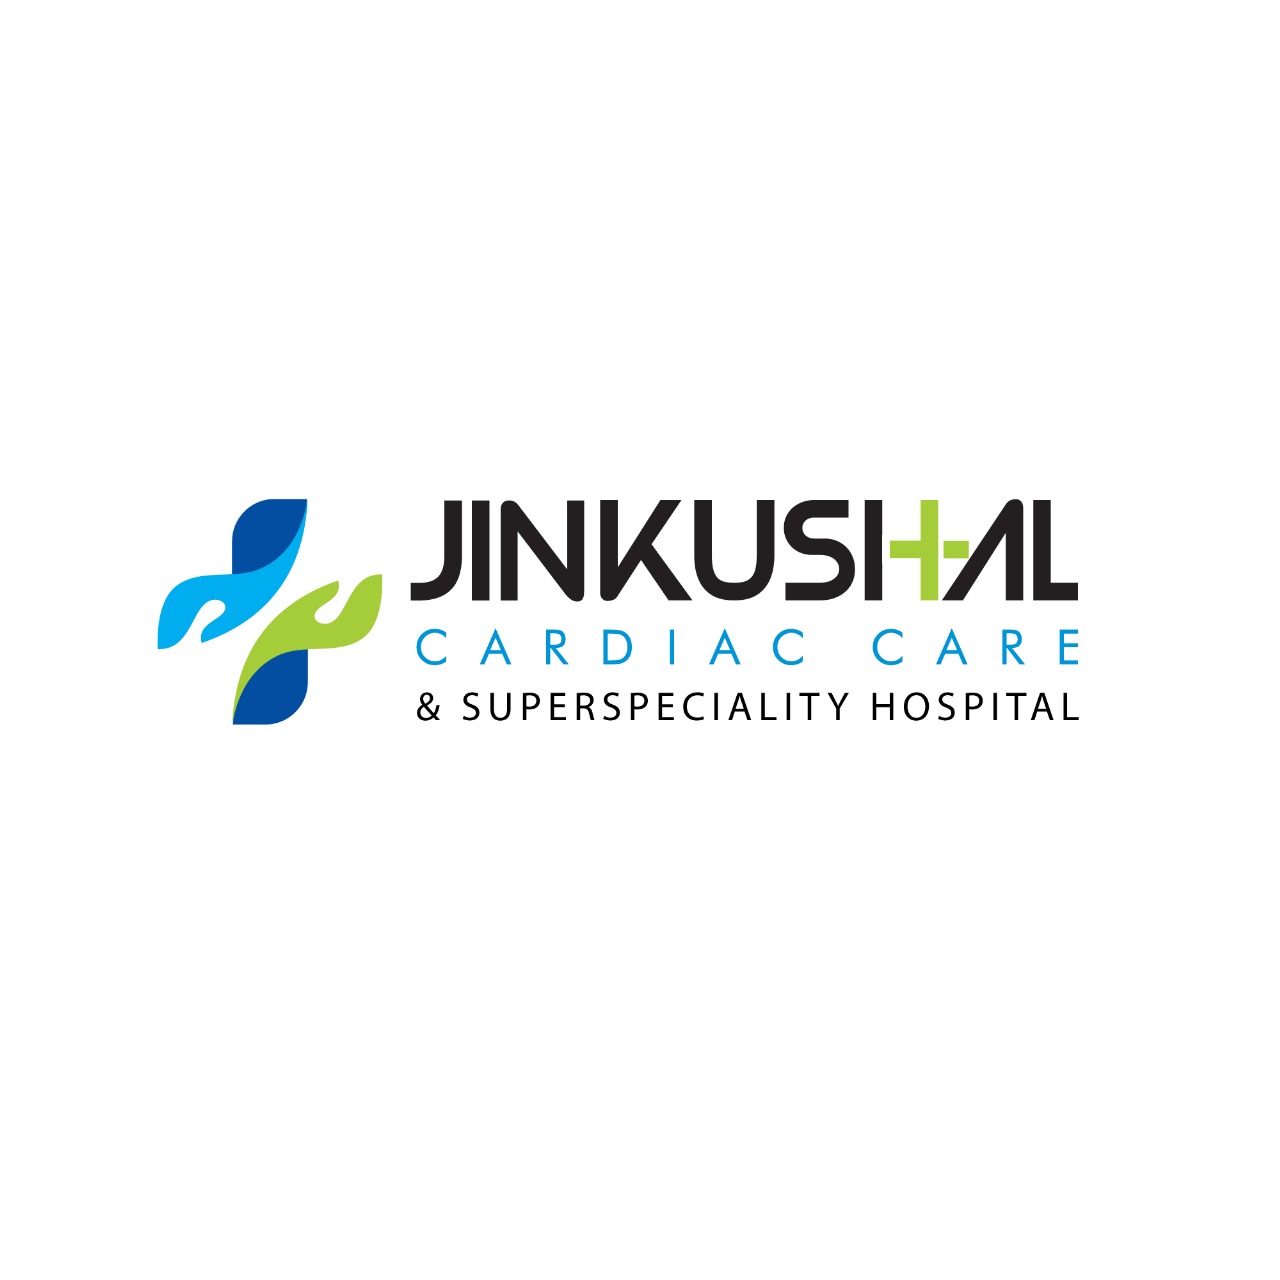 Jinkushal Cardiac Care & Superspeciality Hospital|Clinics|Medical Services